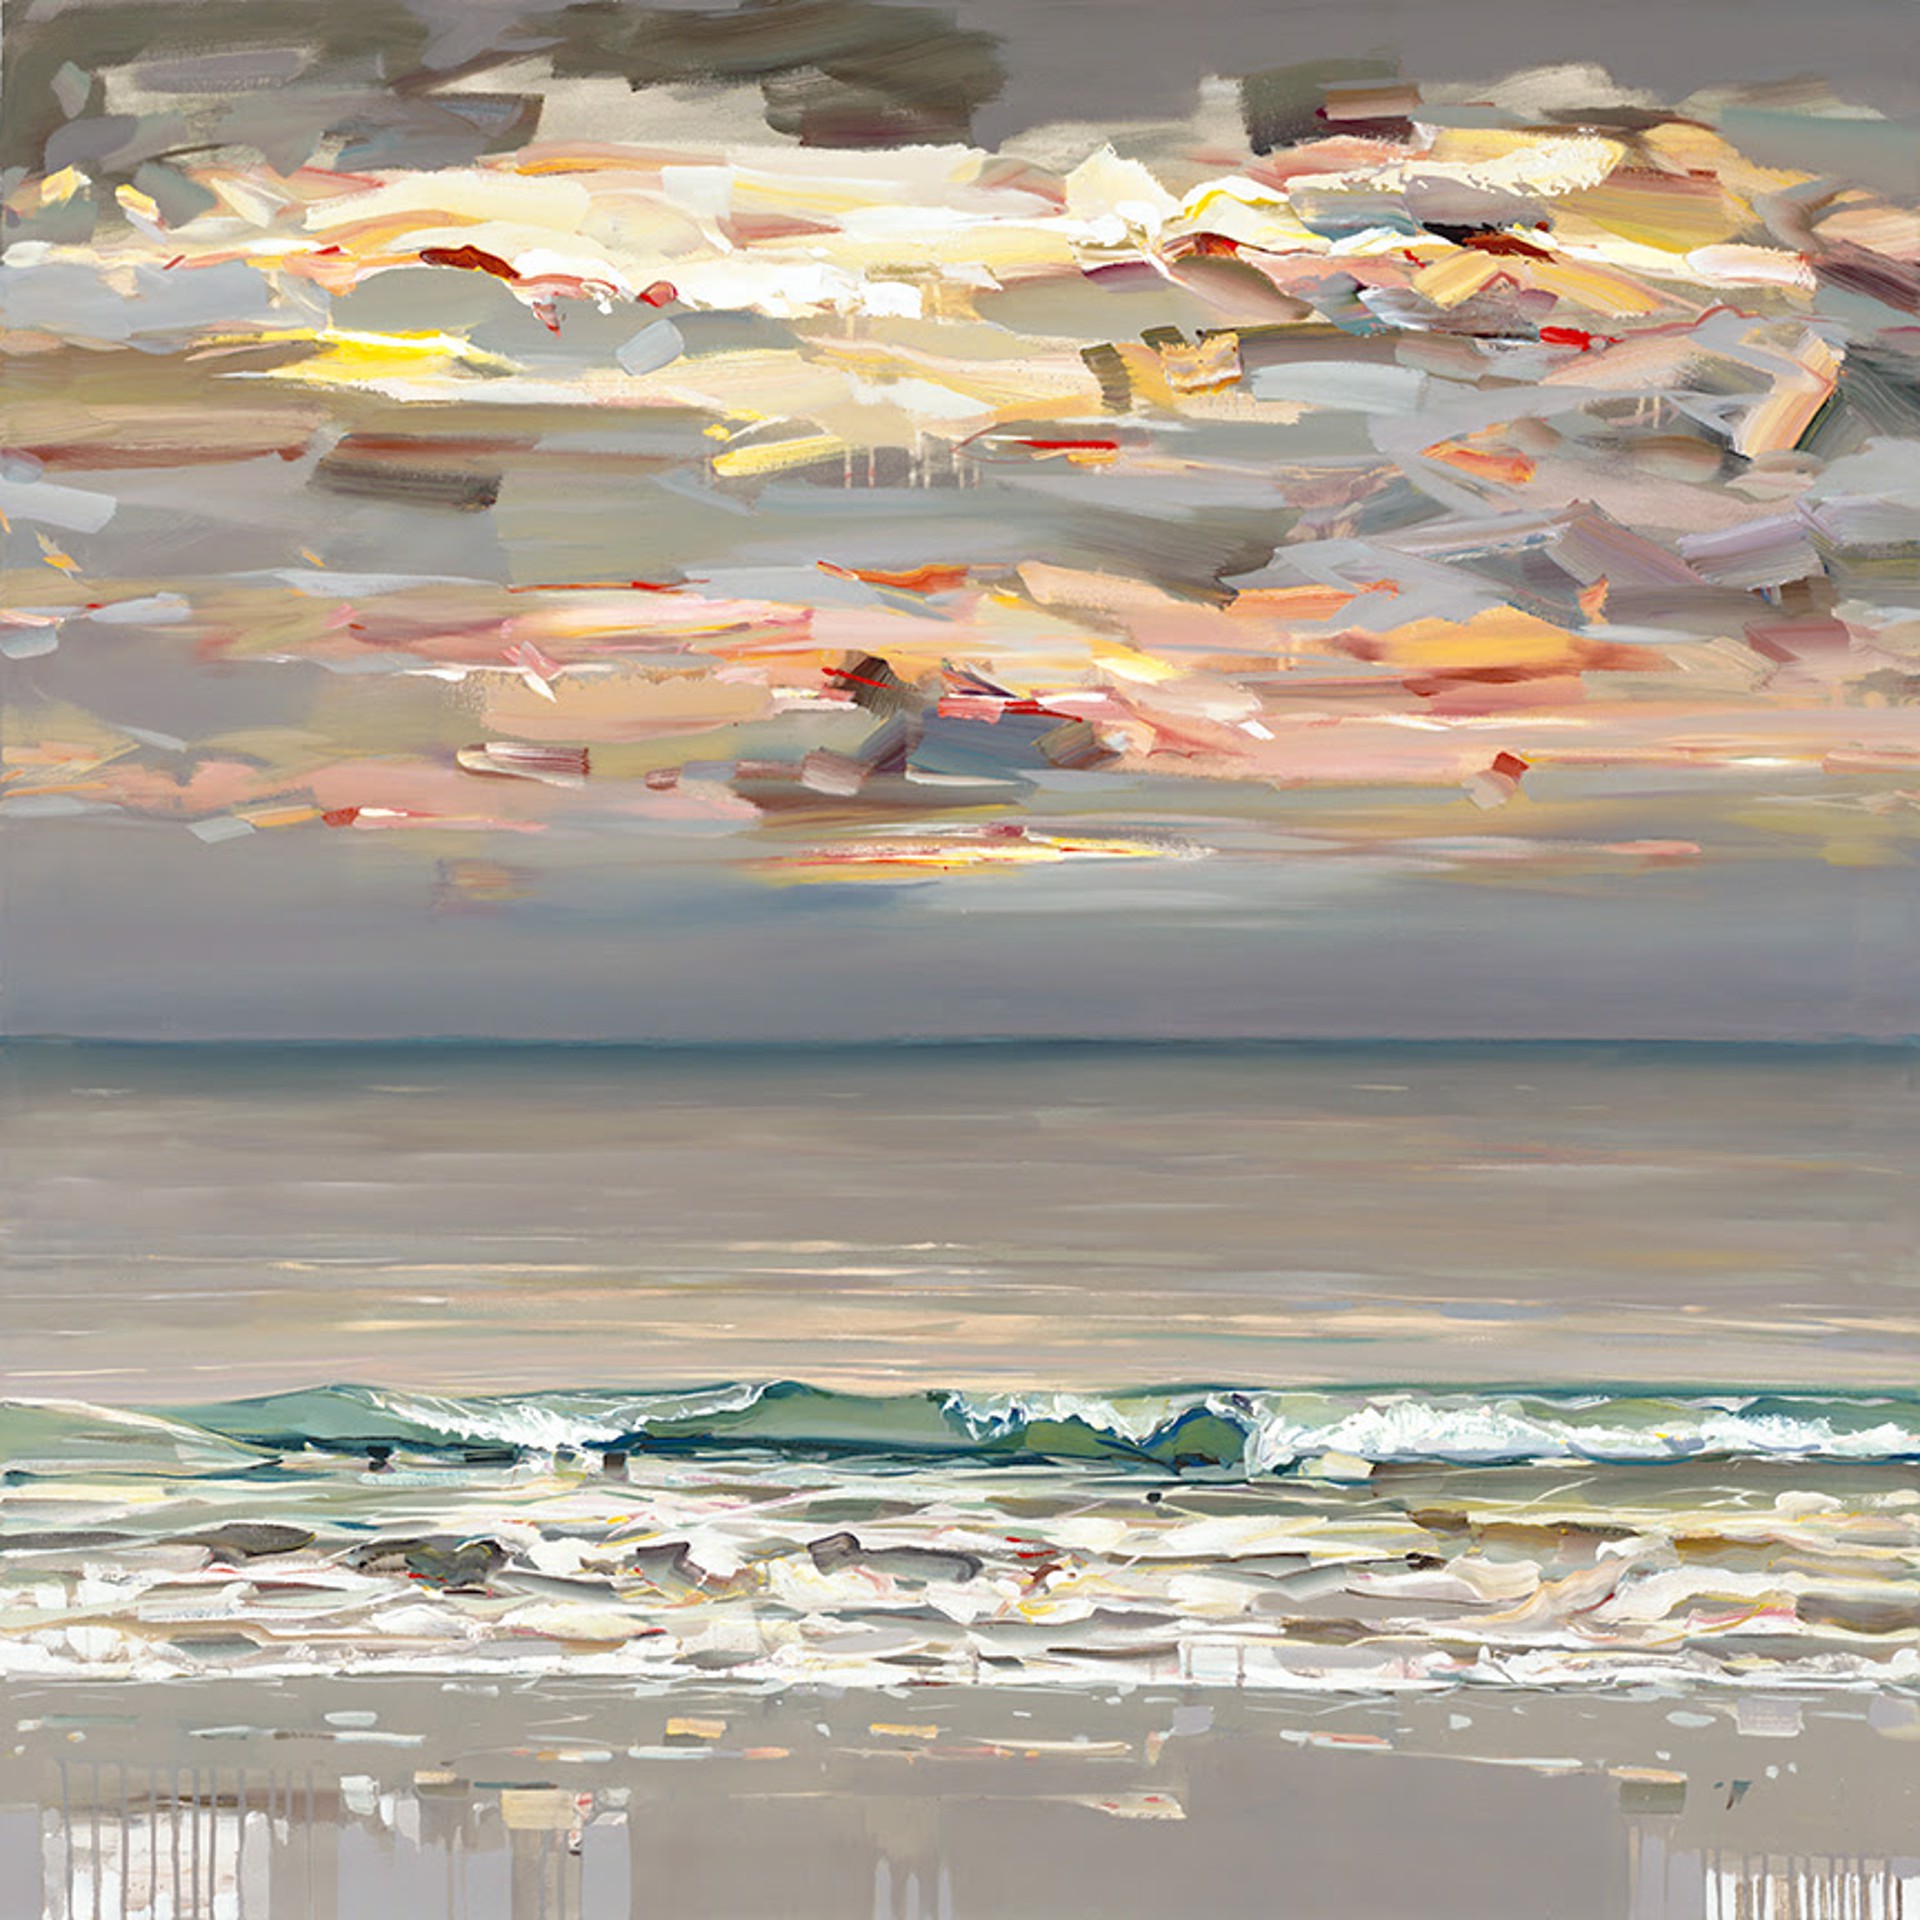 Where the Sky Meets the Sea by Josef Kote